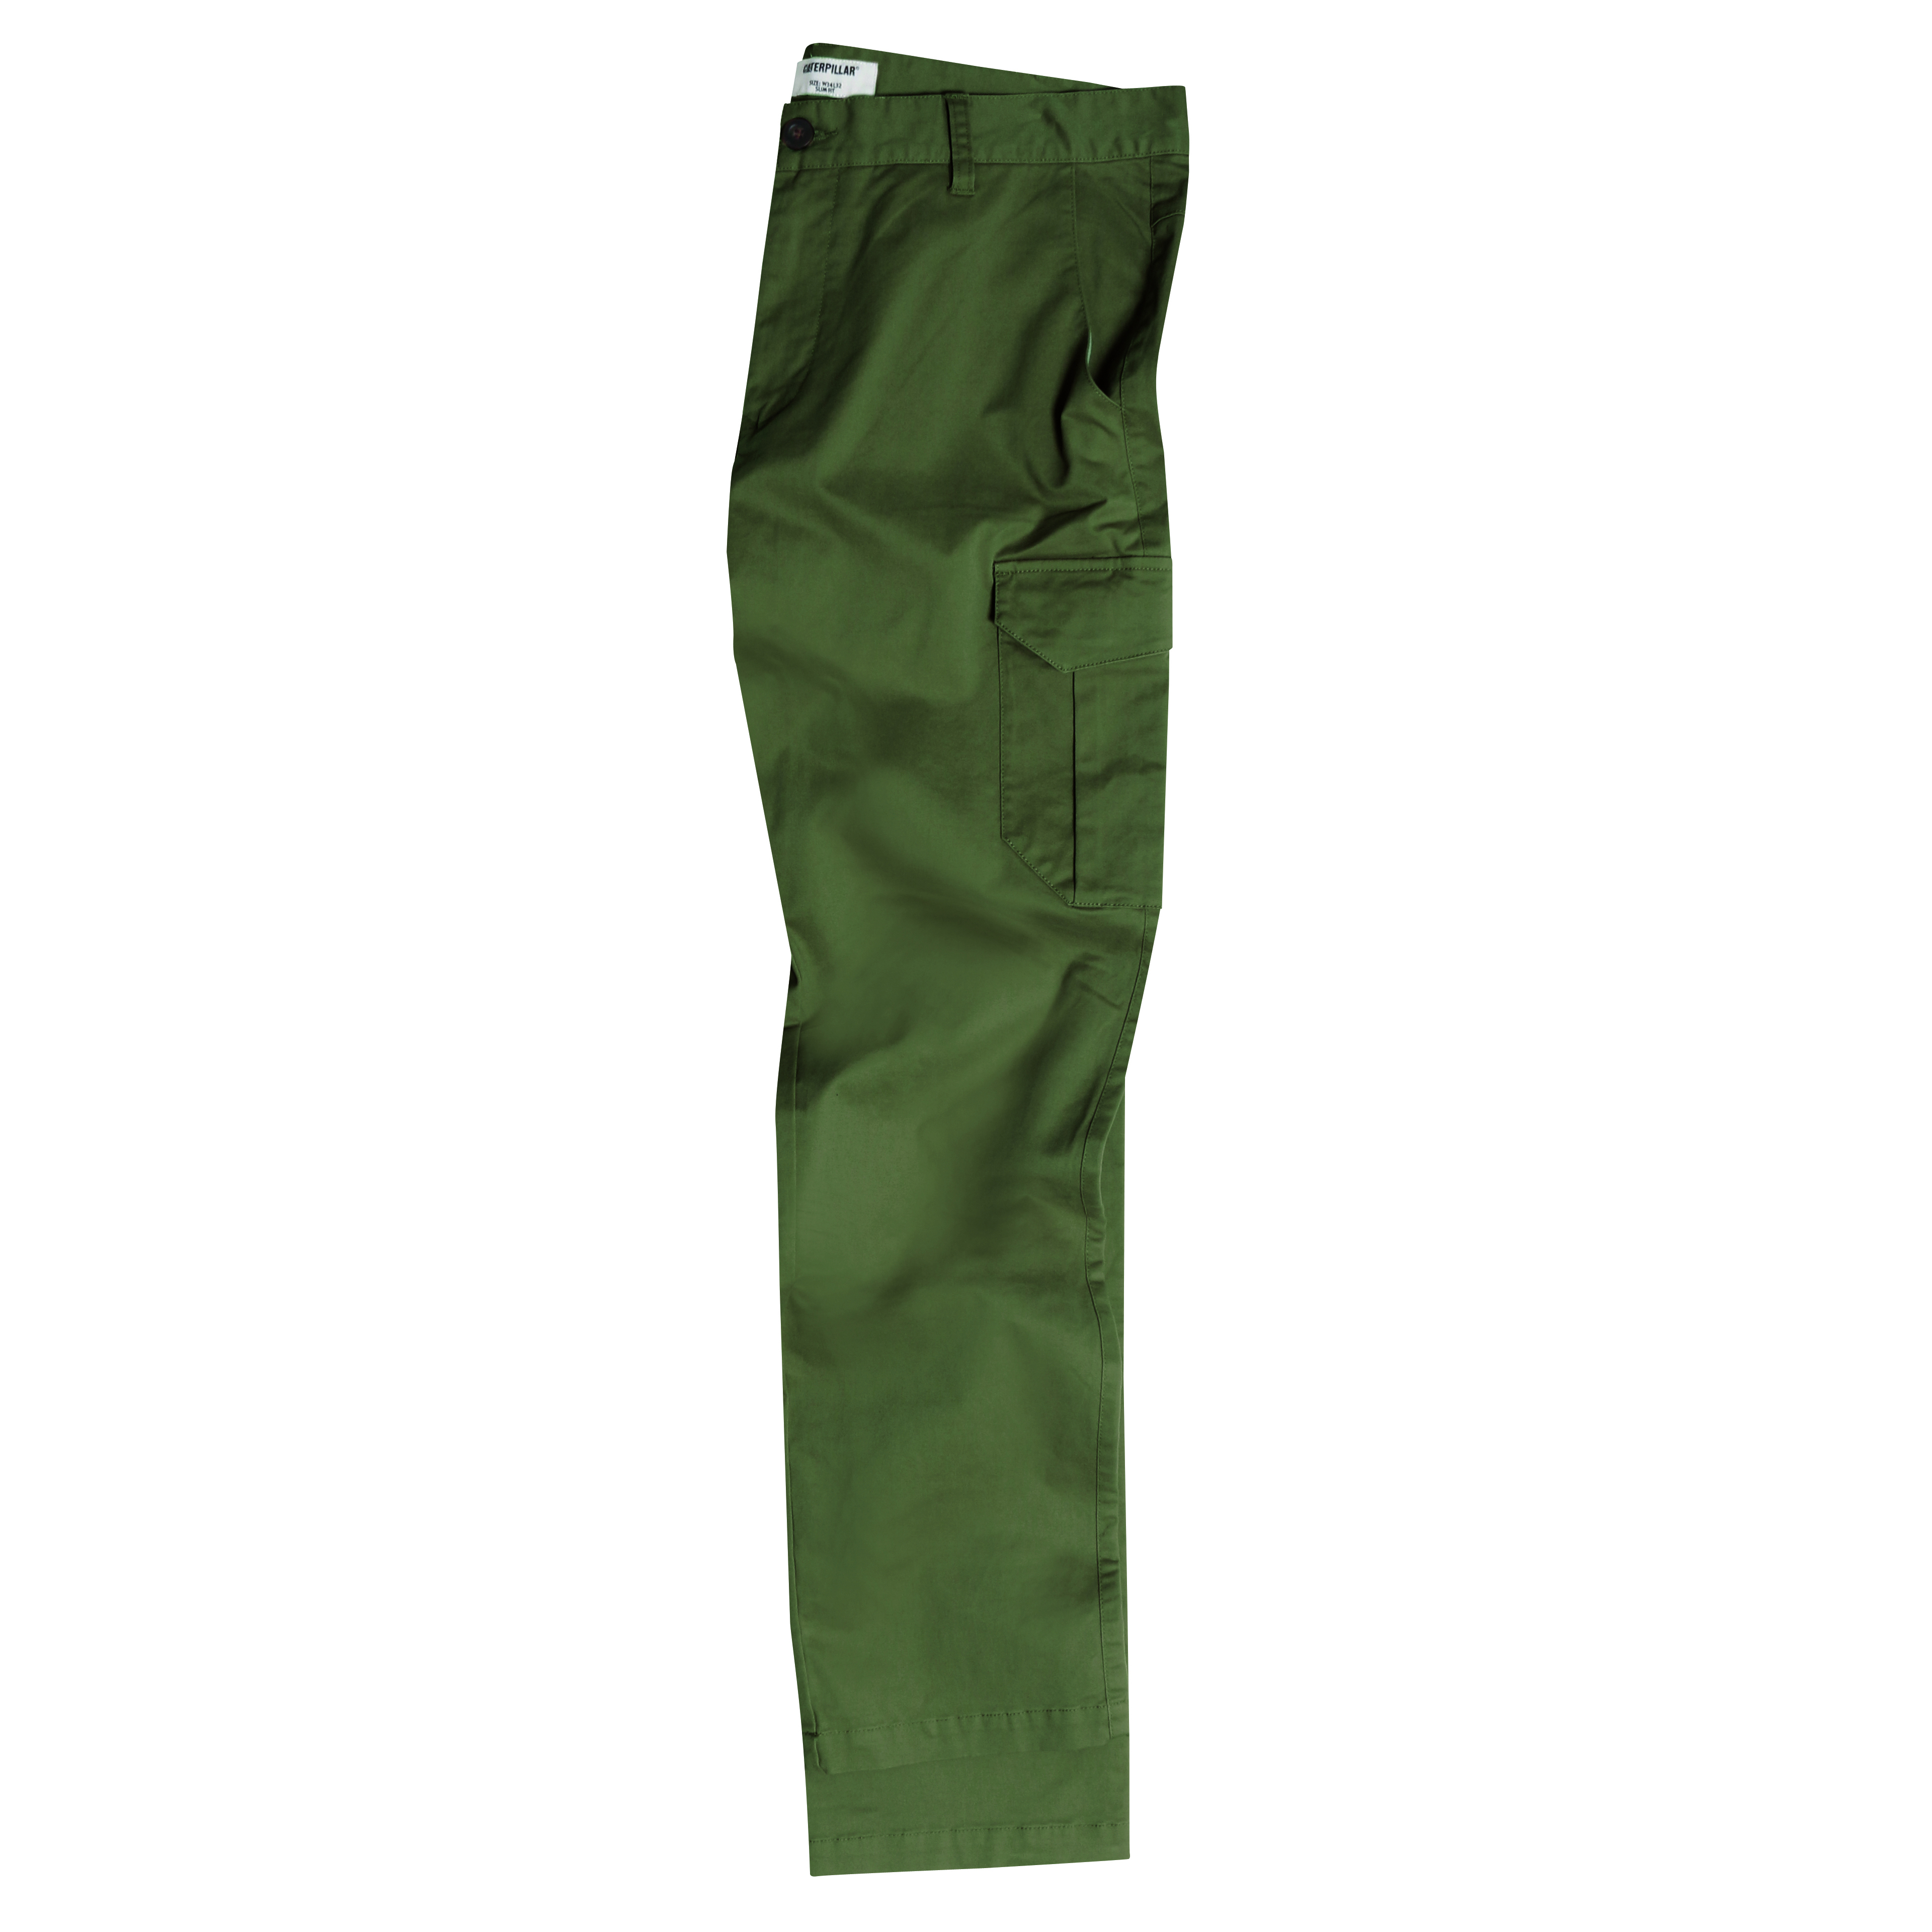 Caterpillar Clothing Online Pakistan - Caterpillar Cargo Heritage Slim Fit Mens Pants Green (283906-SHE)